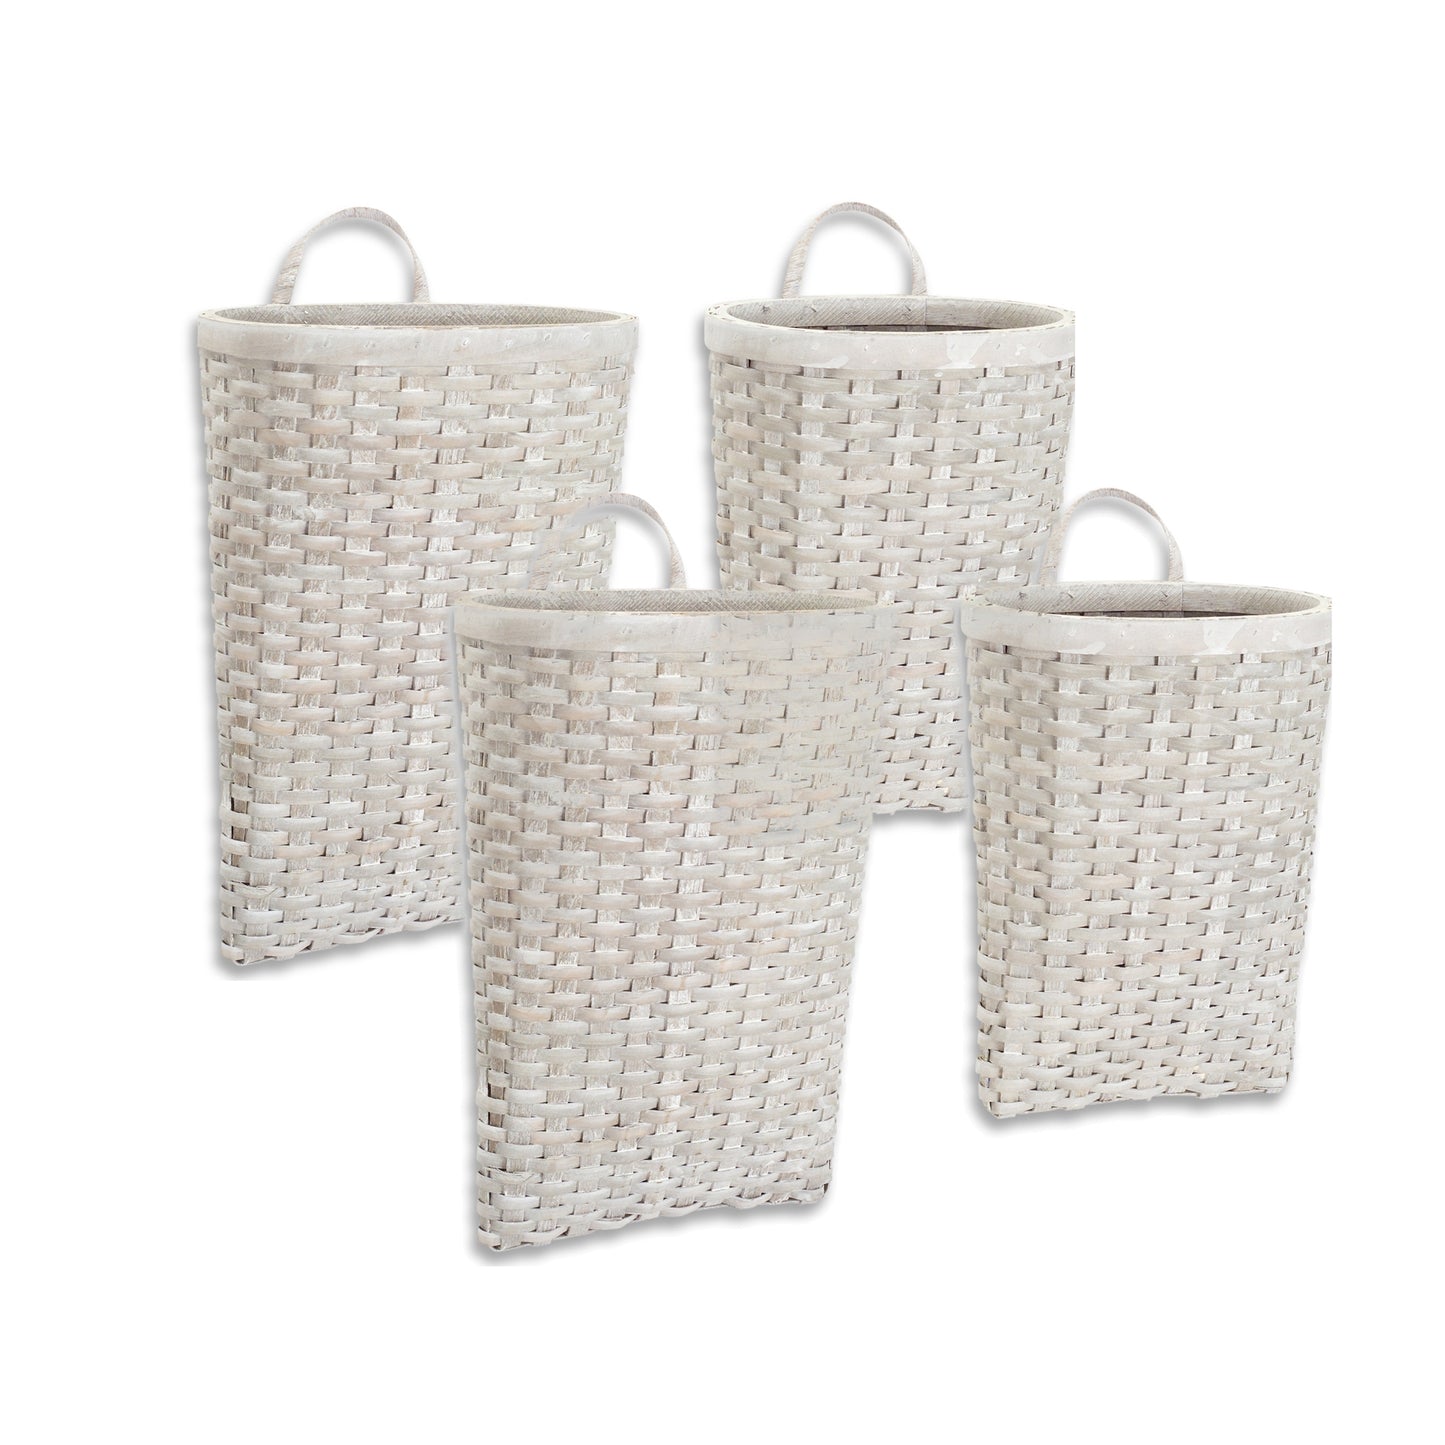 Woven Metasequoia Wood Wall Baskets (Set of 4)